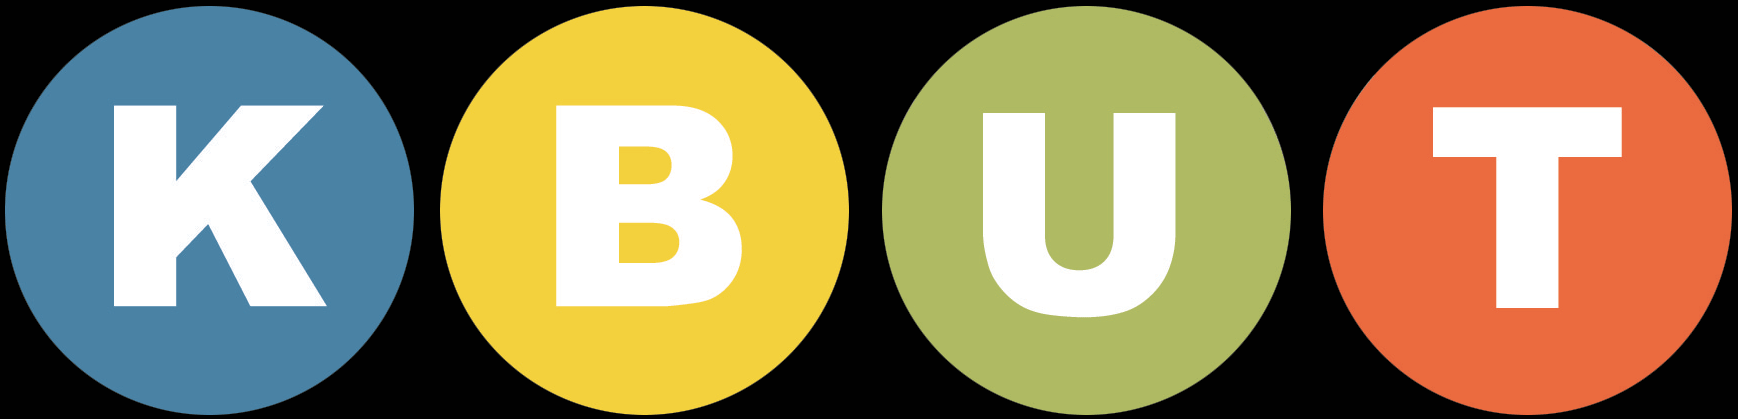 KBUT-Player-Logo